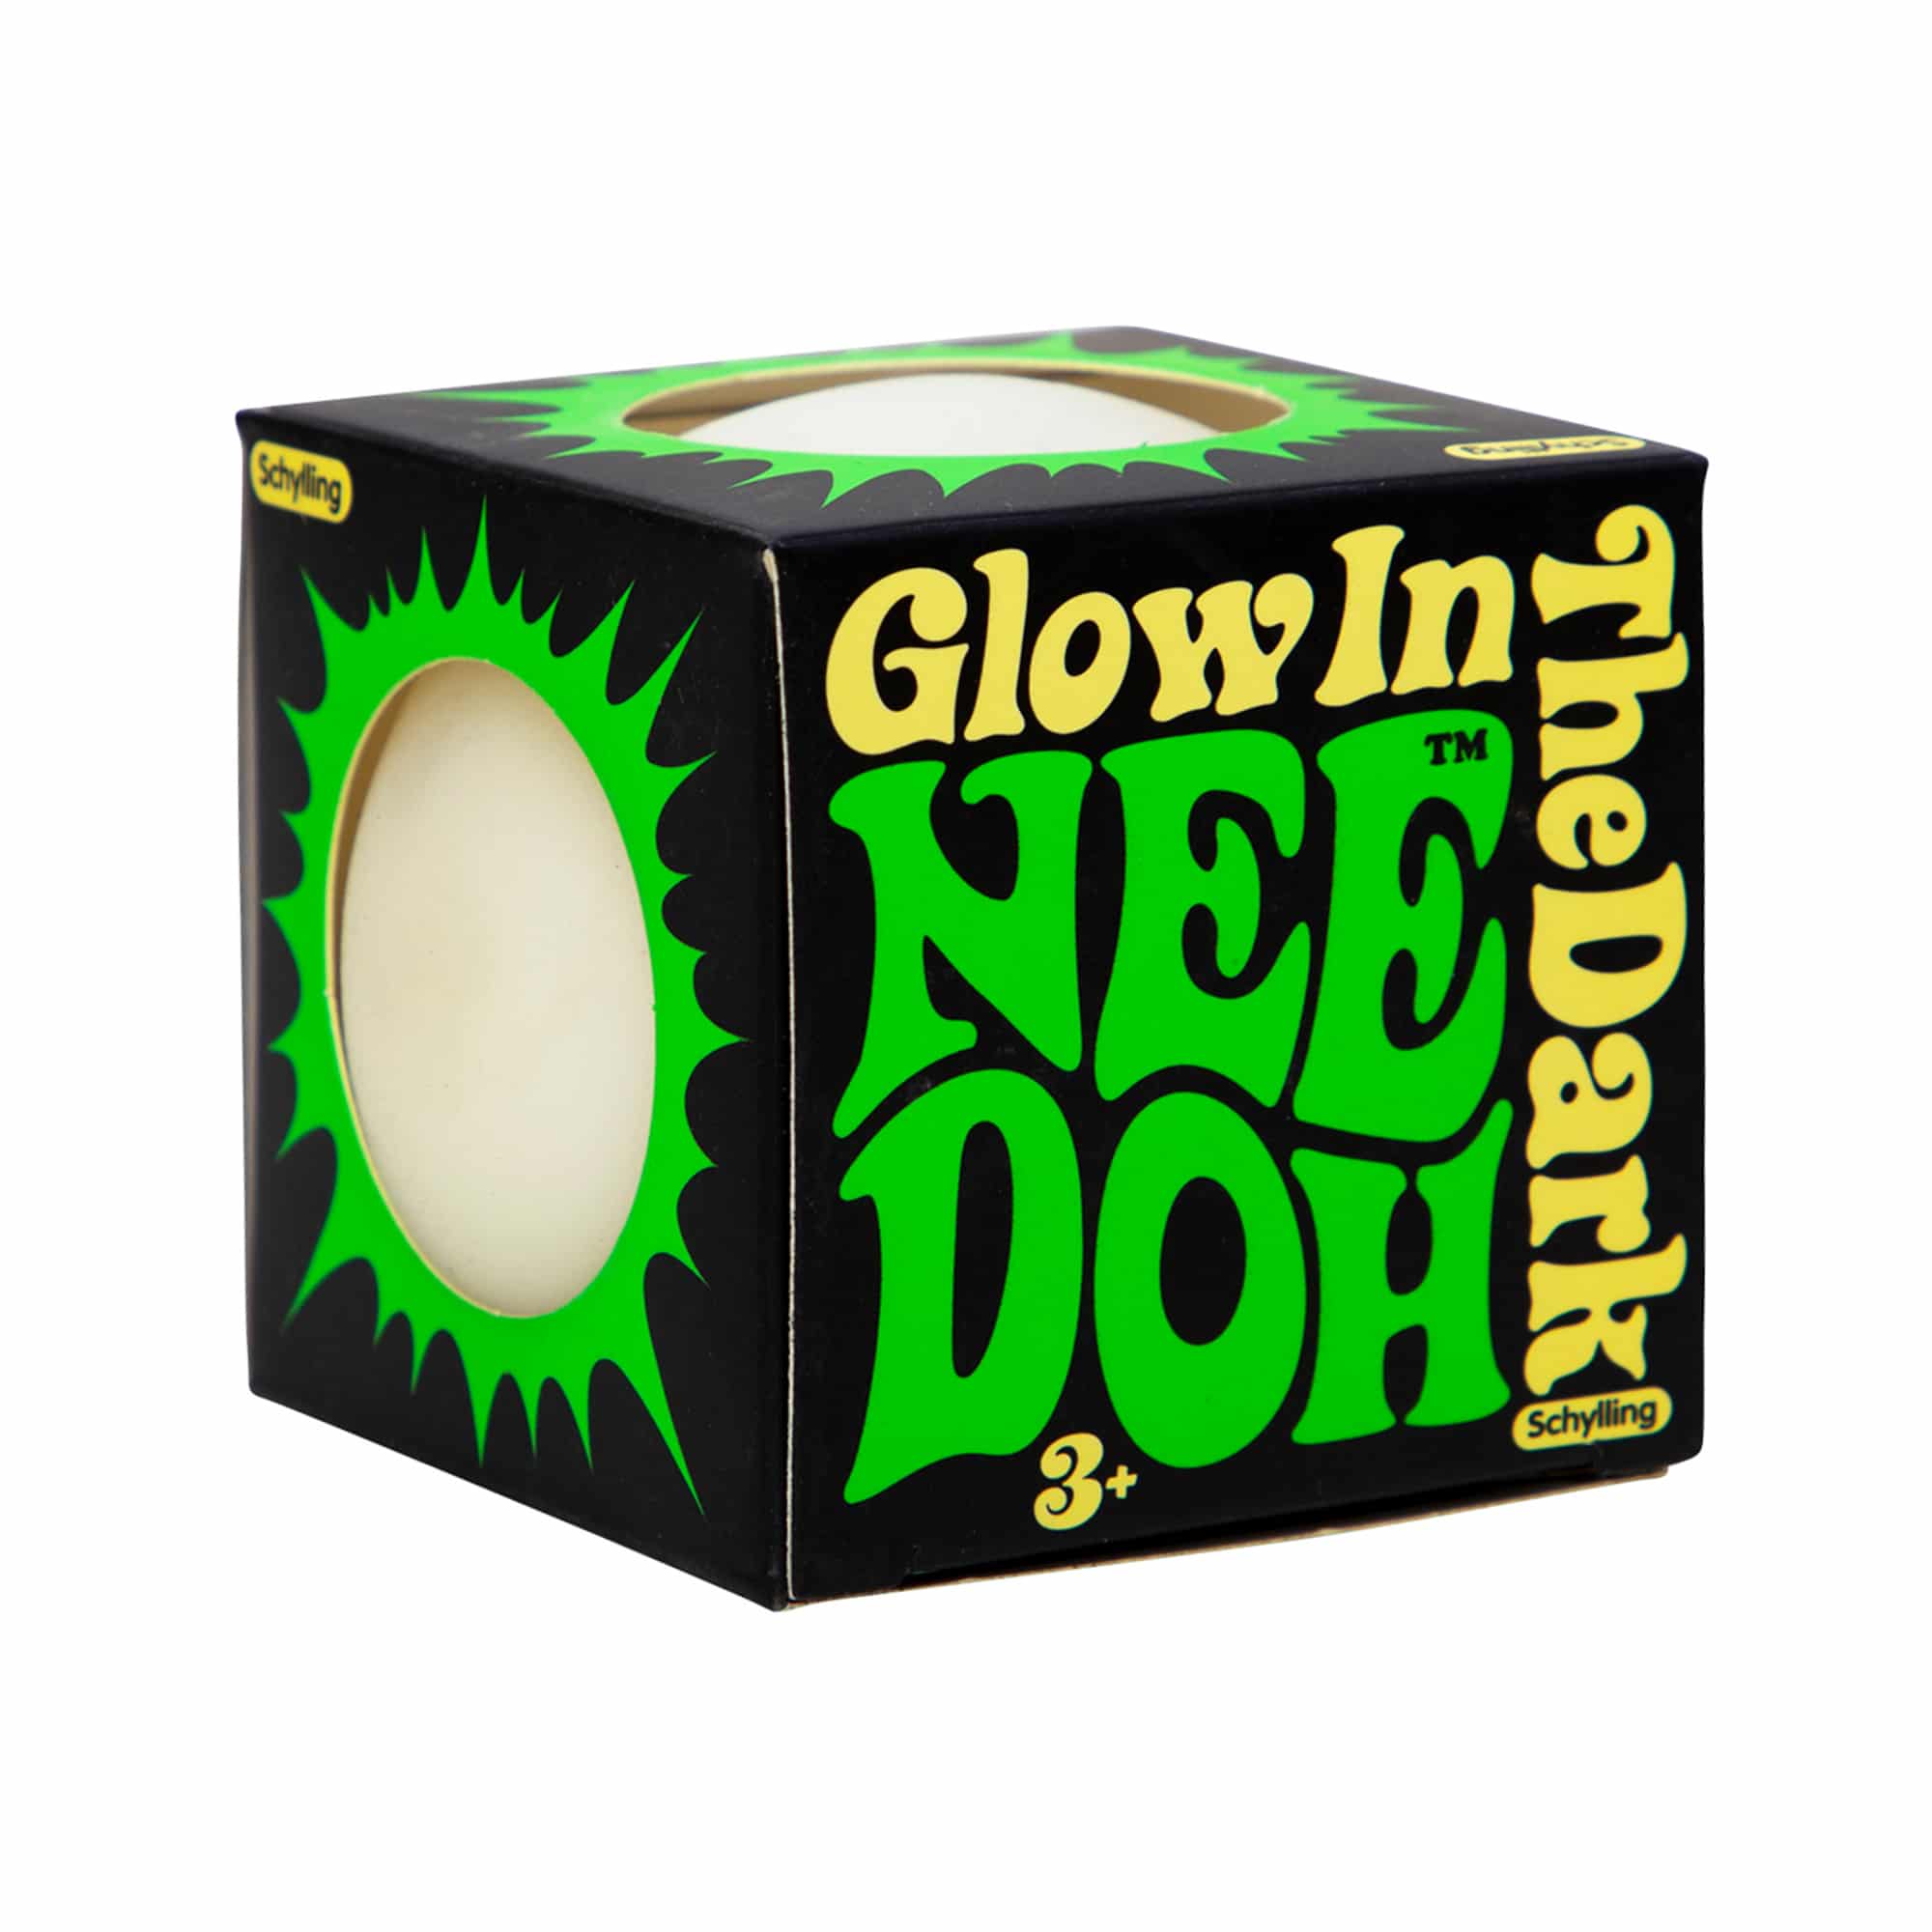 NeeDoh - Glow in the Dark